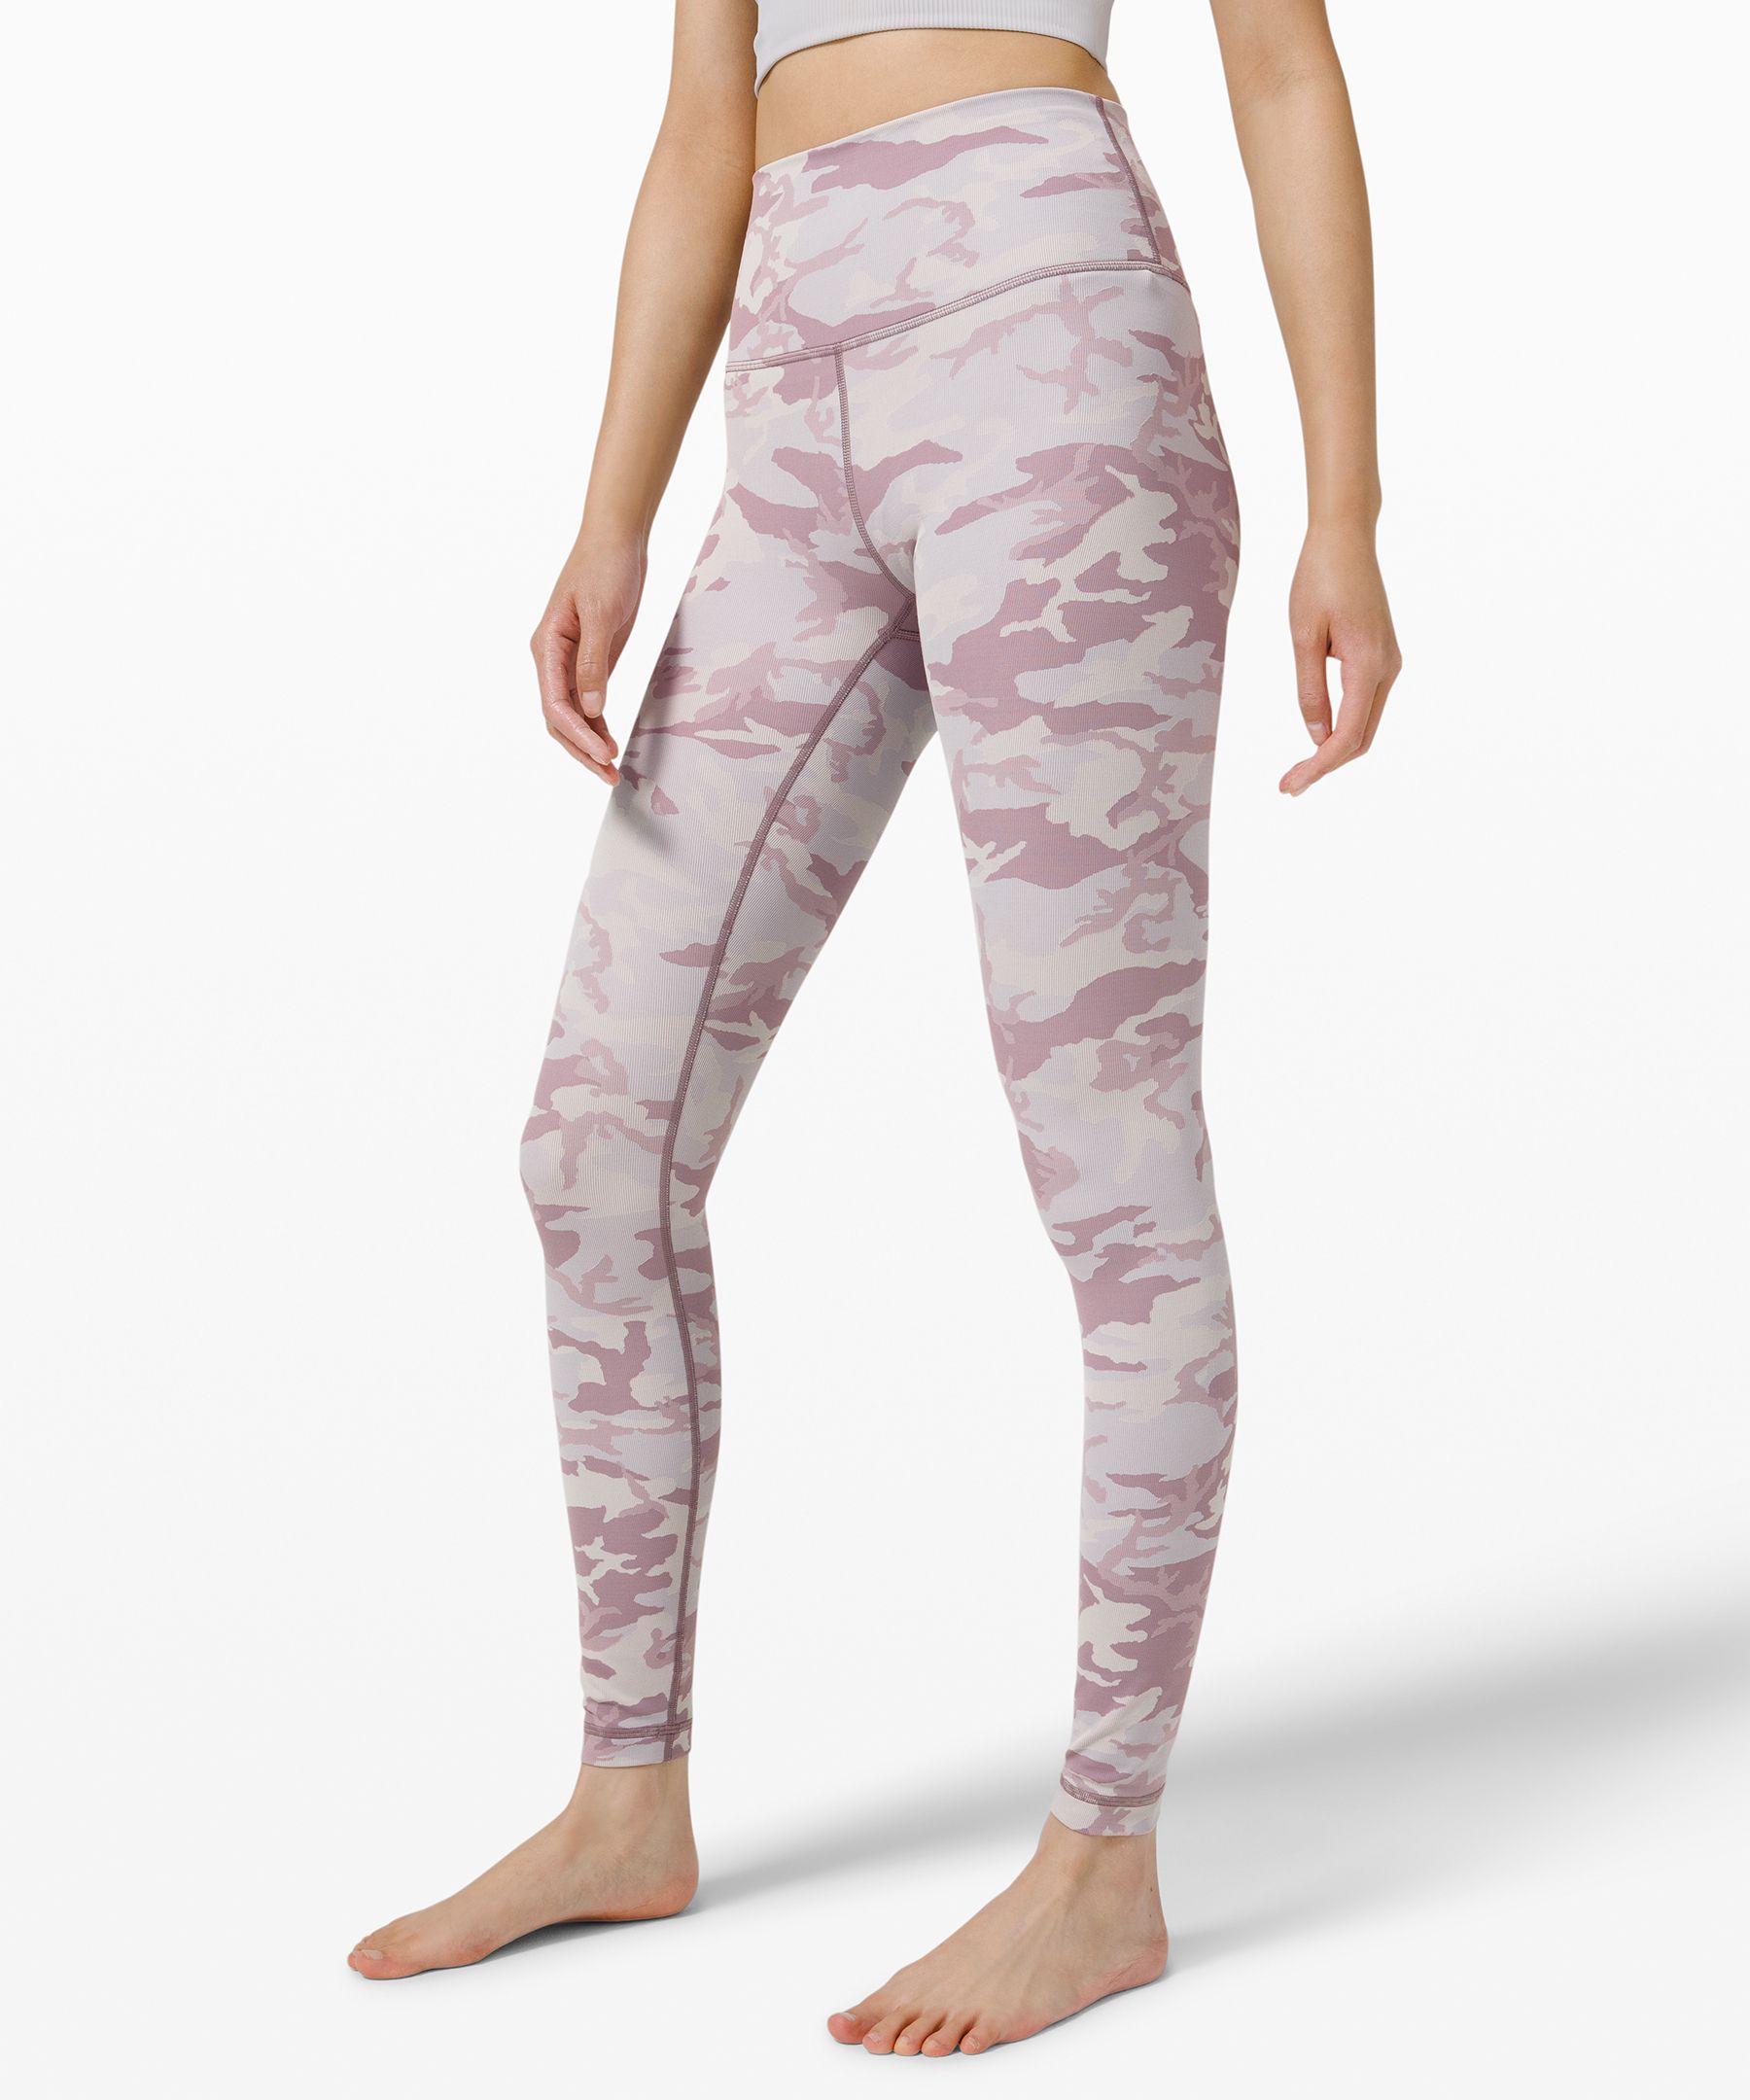 lululemon pink pants